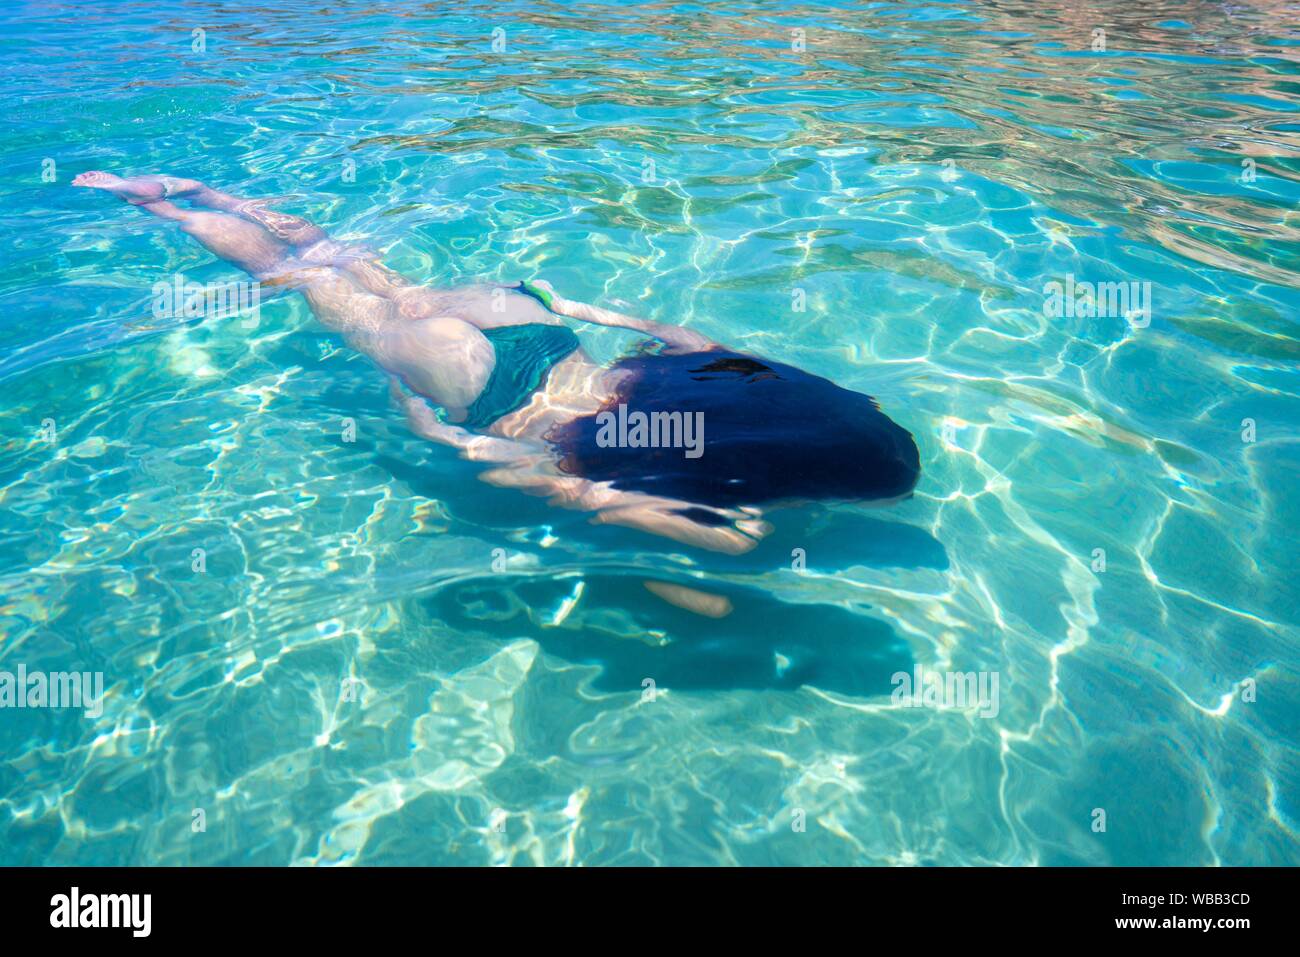 Ibiza bikini girl swimming clear water beach of Balearic Islands. Stock Photo